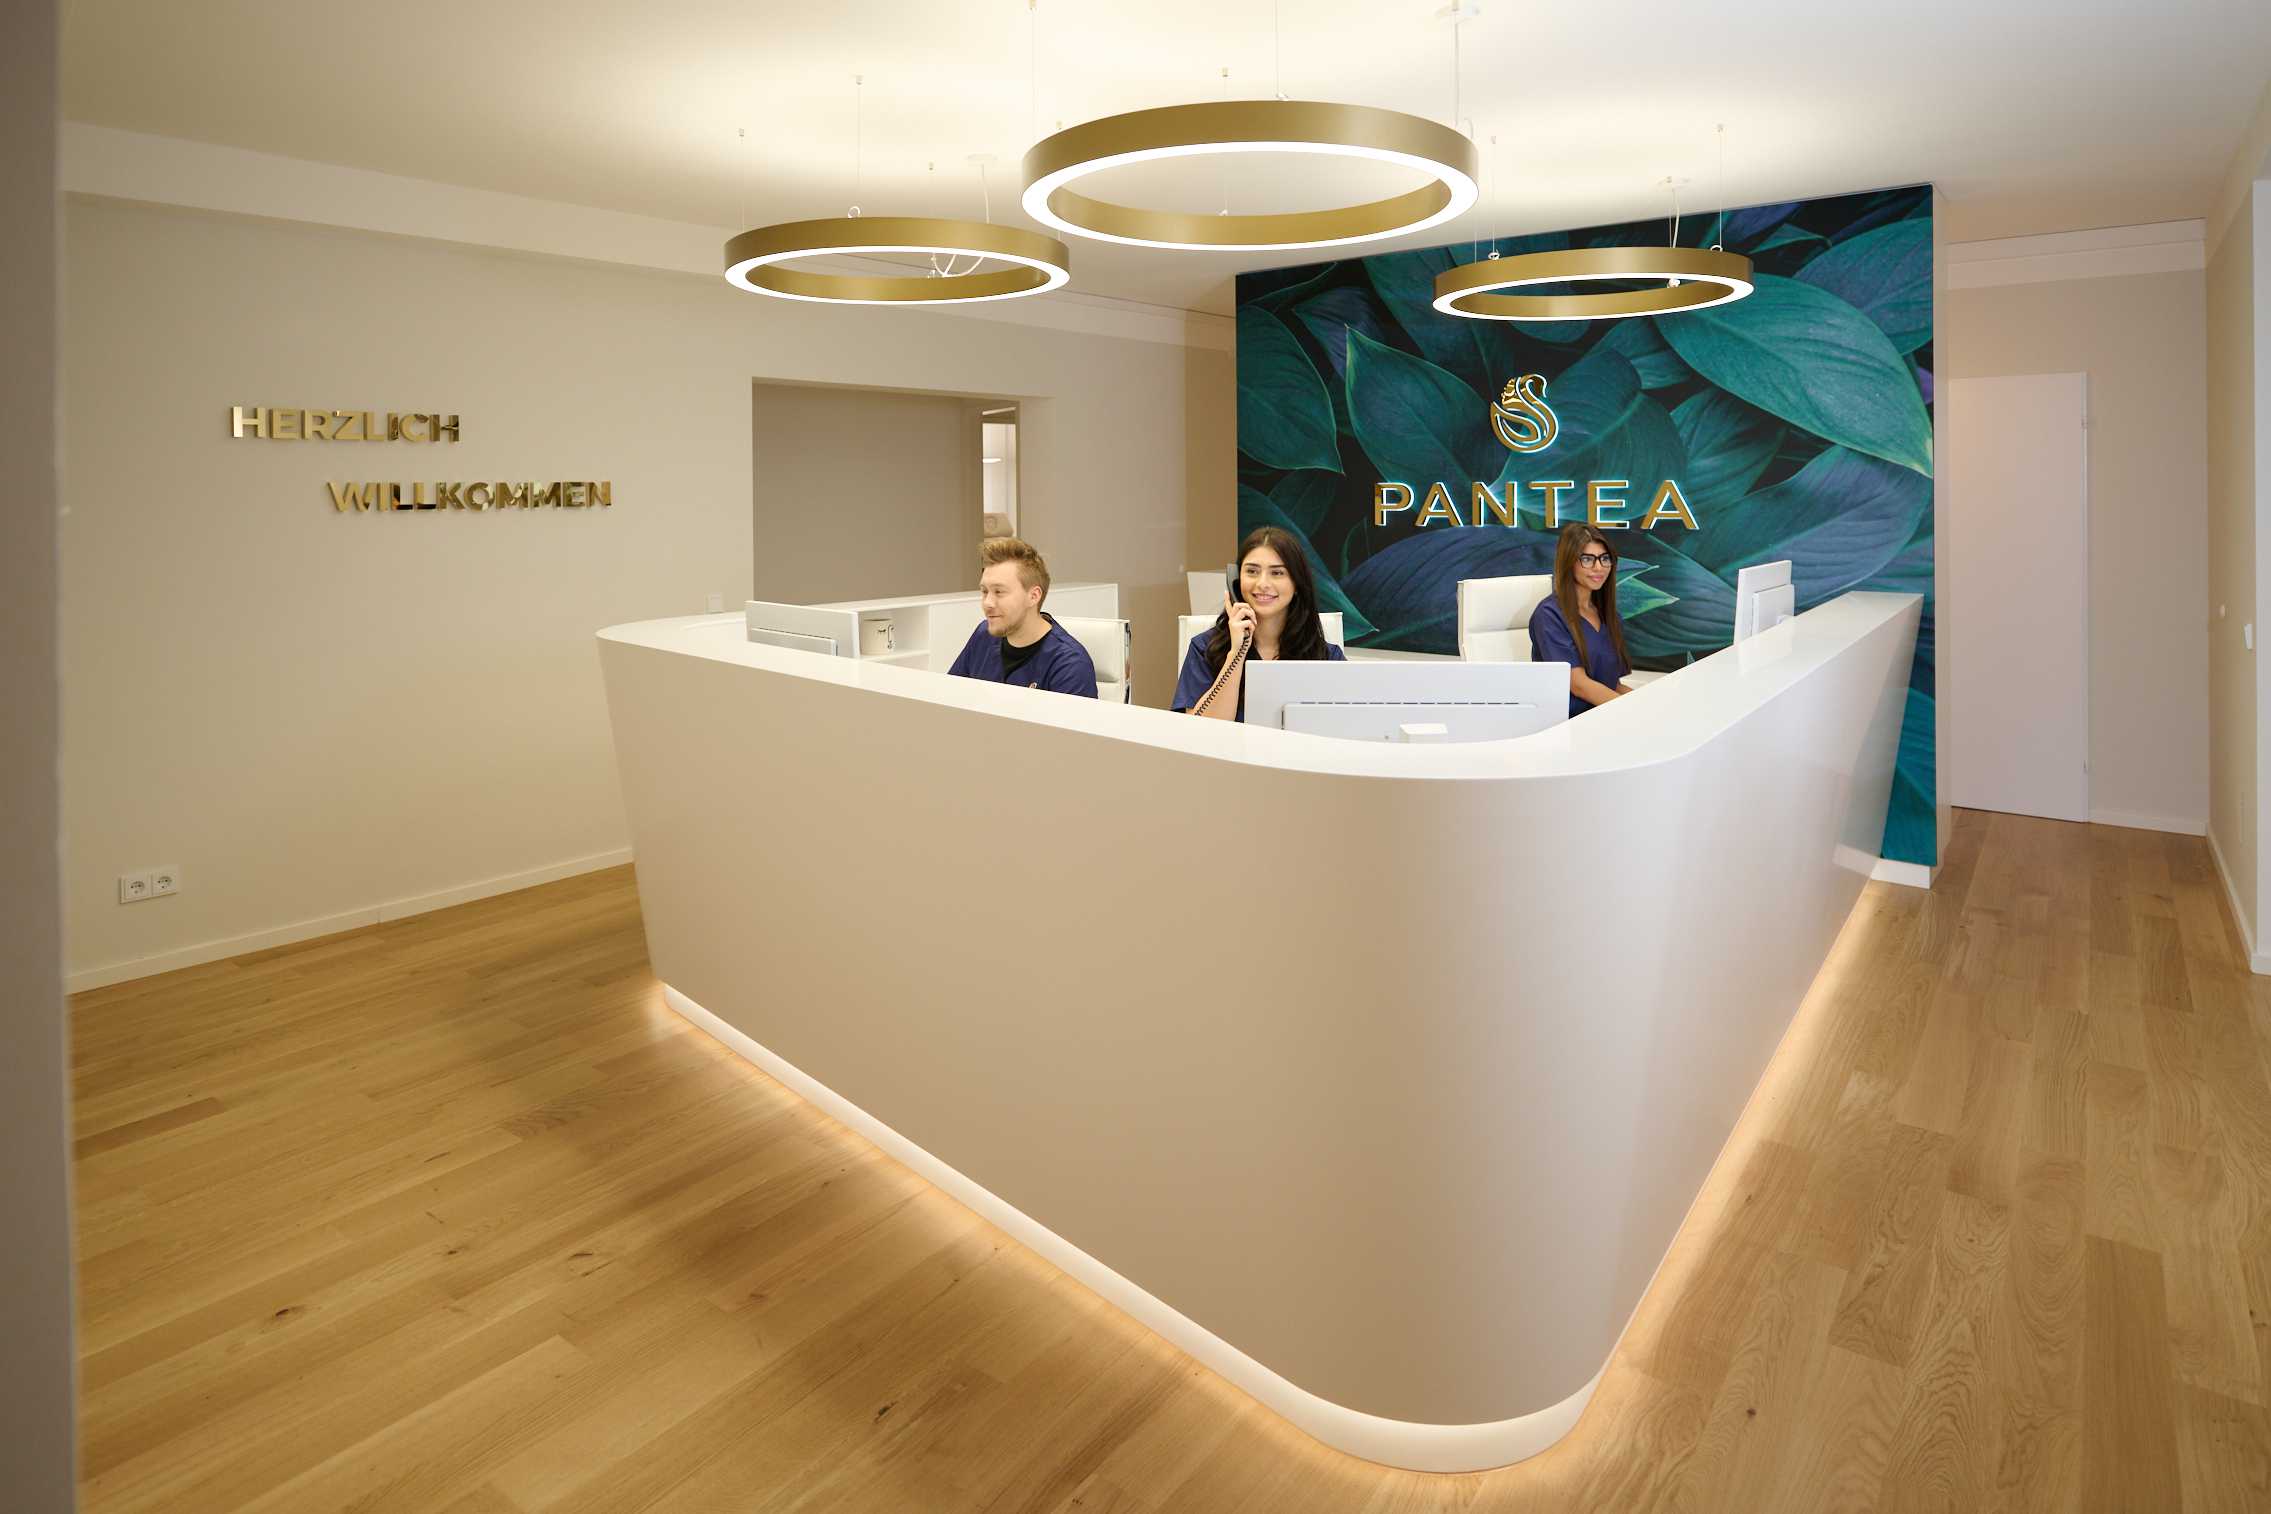 PANTEA private practice reception team